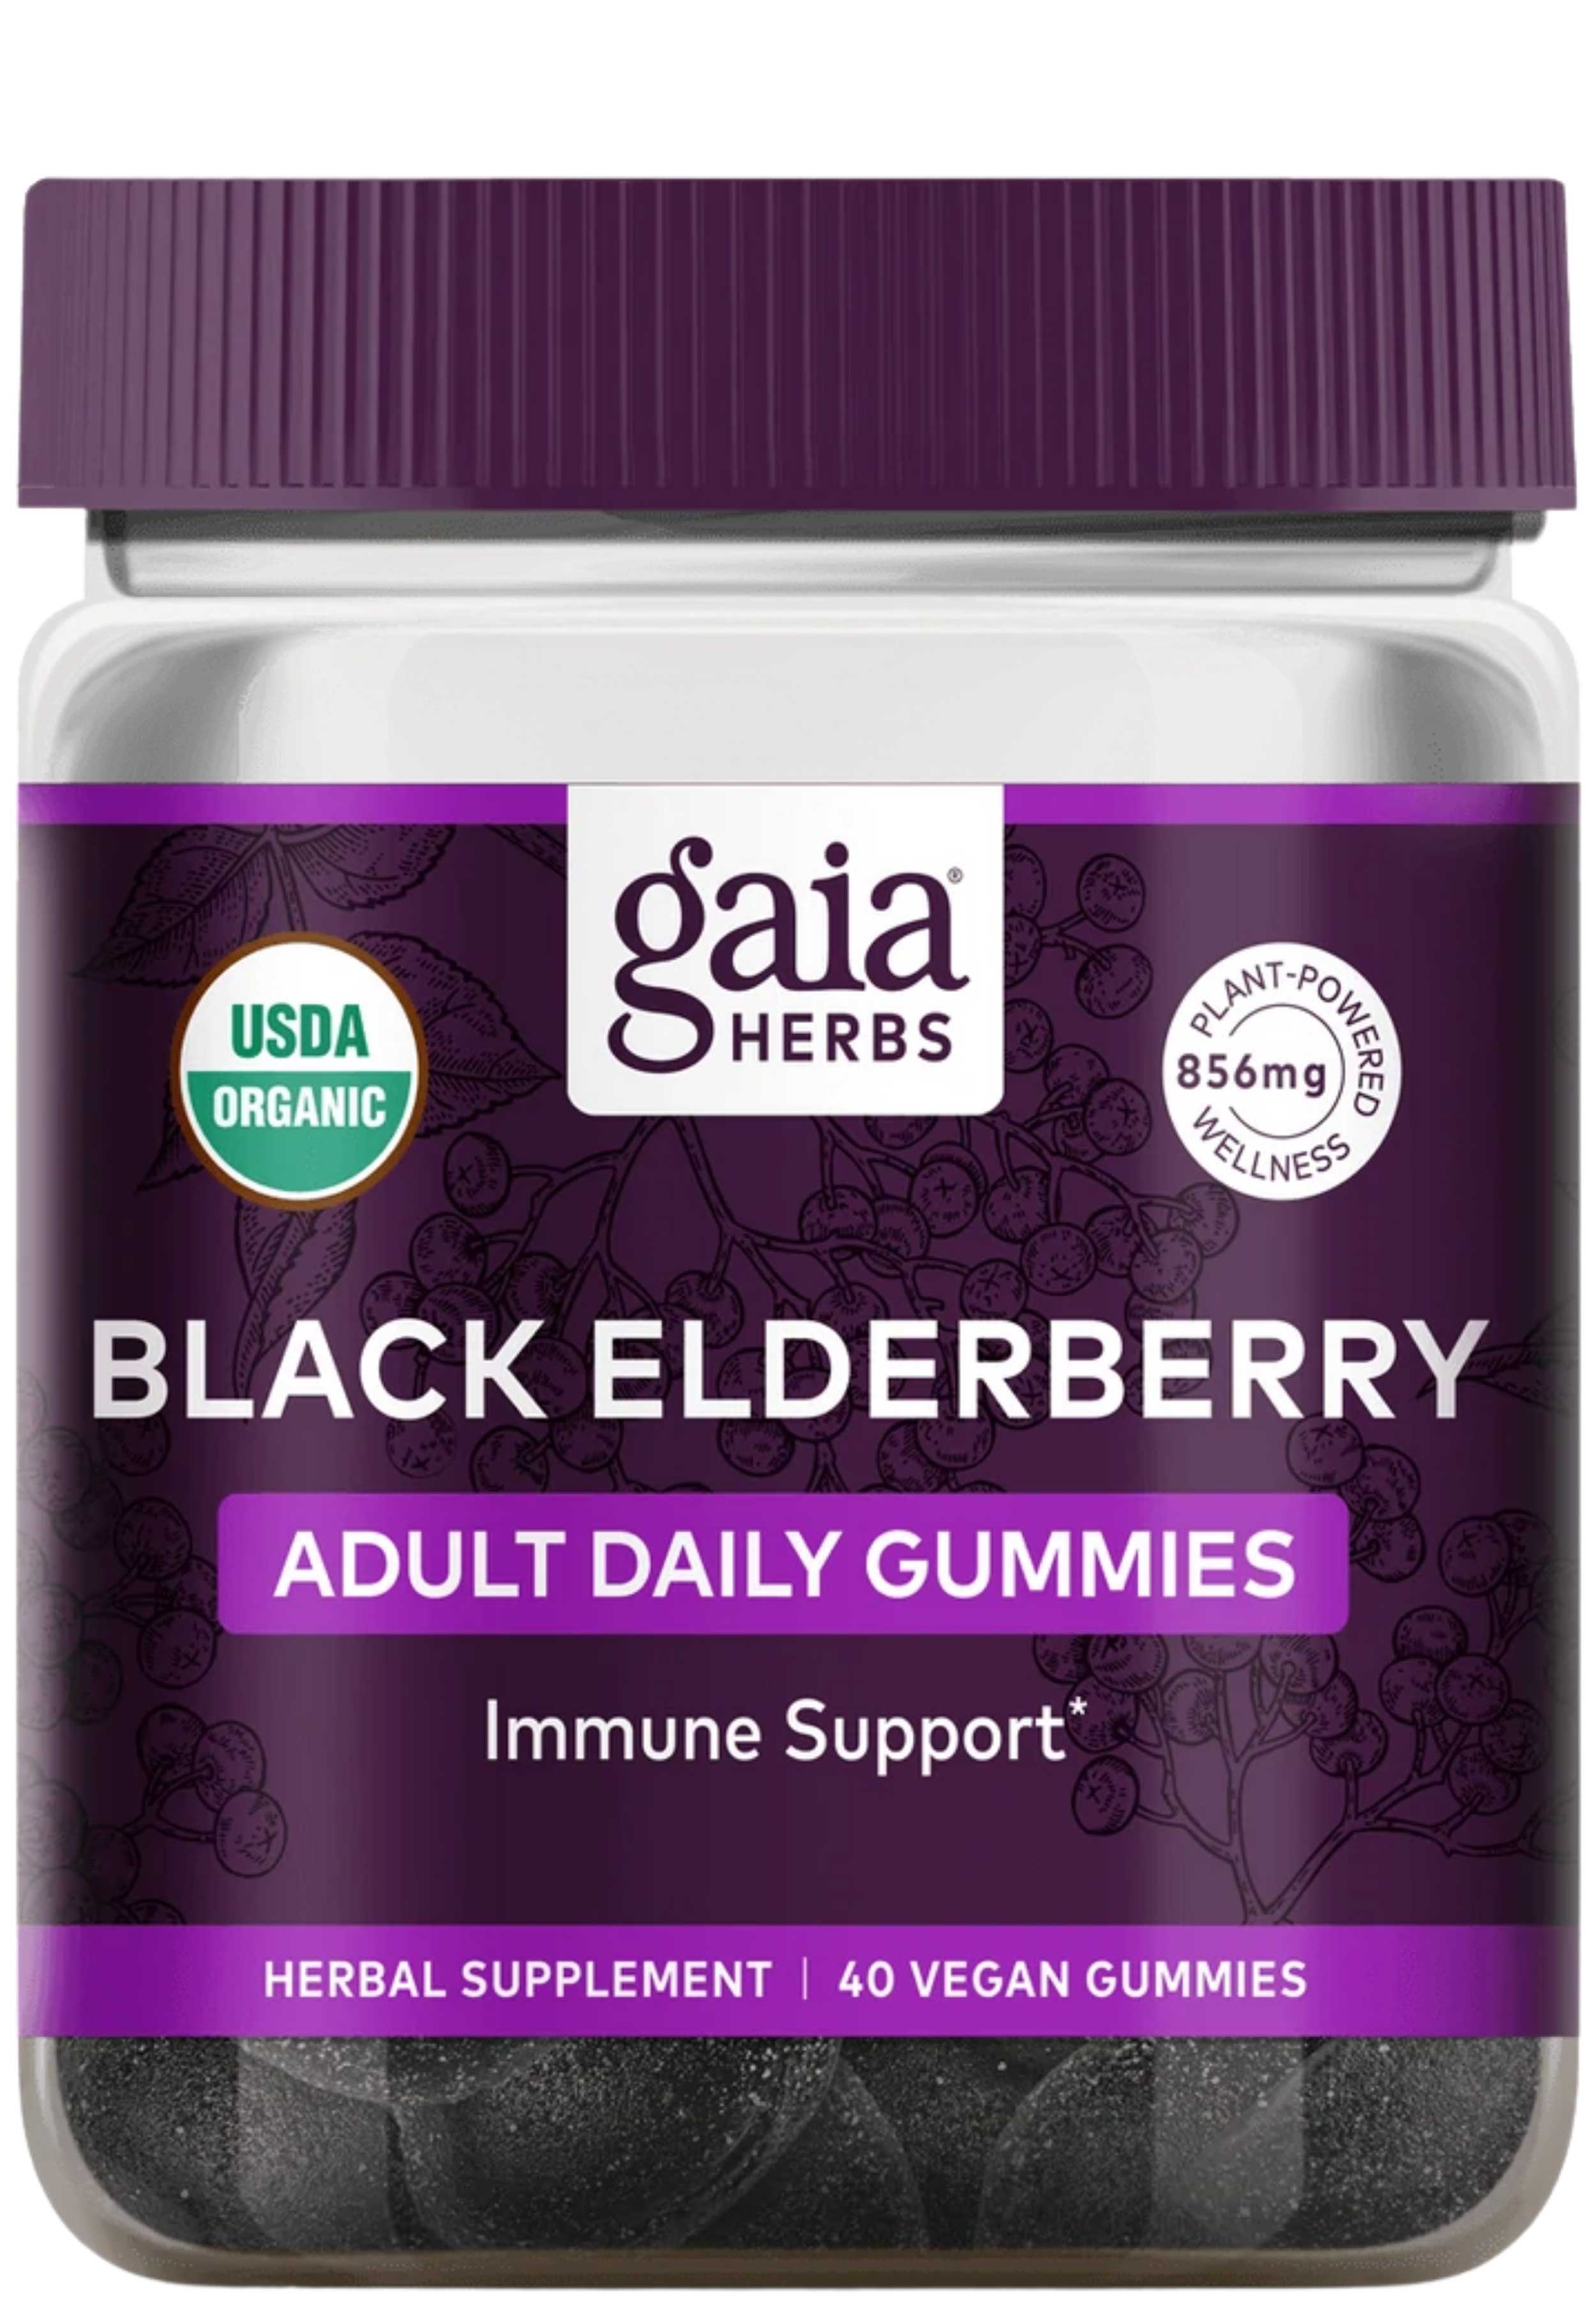 Gaia Herbs Black Elderberry Adult Daily